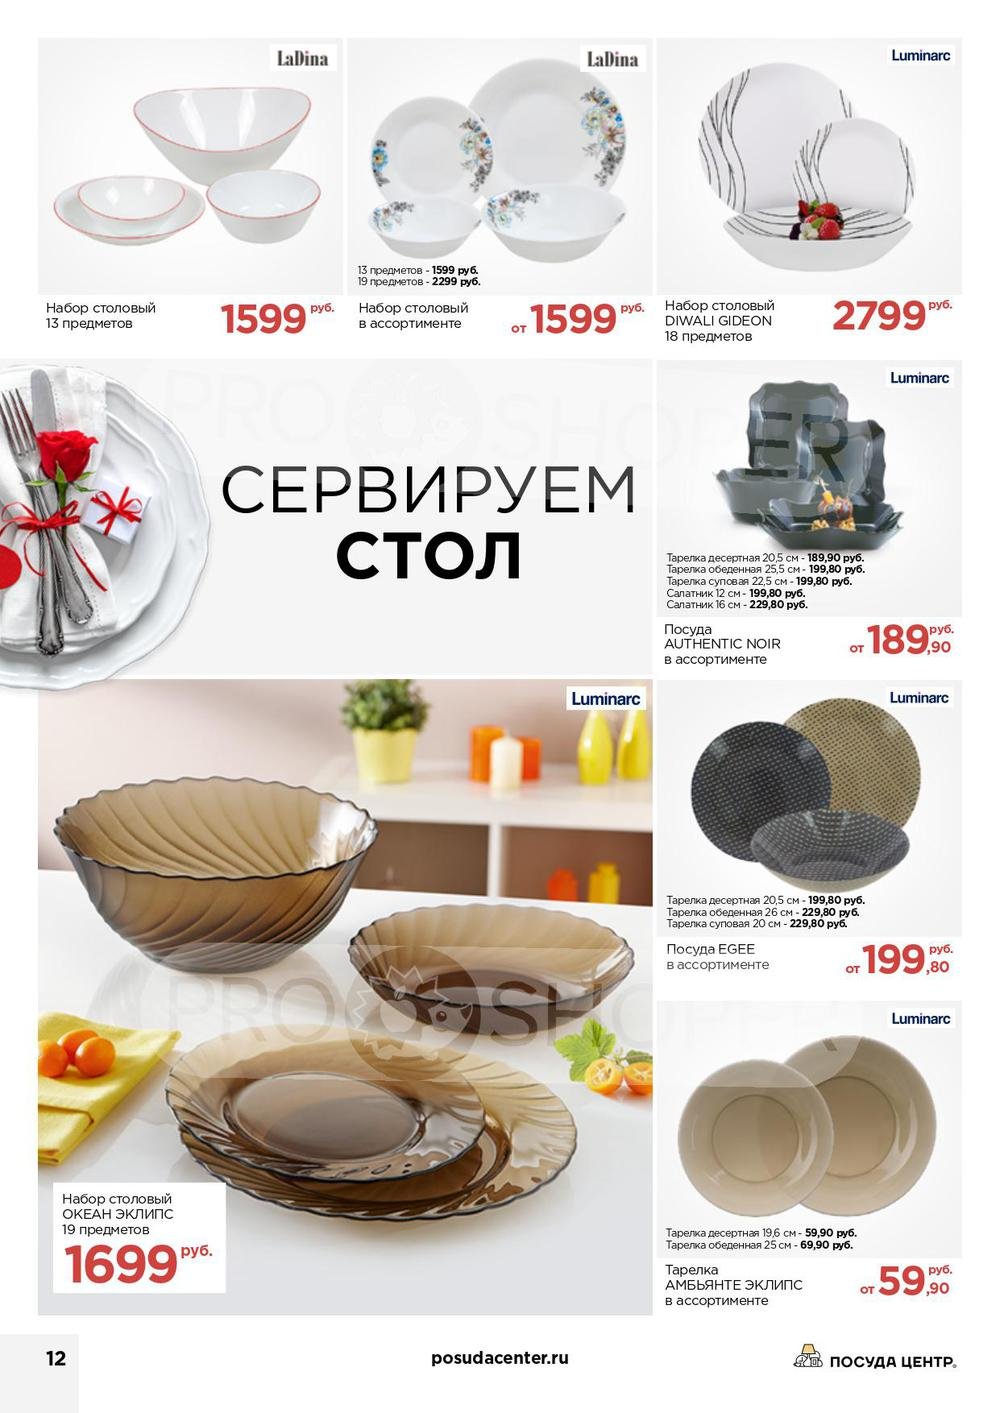 Барнаул посуда центр каталог товаров с ценами